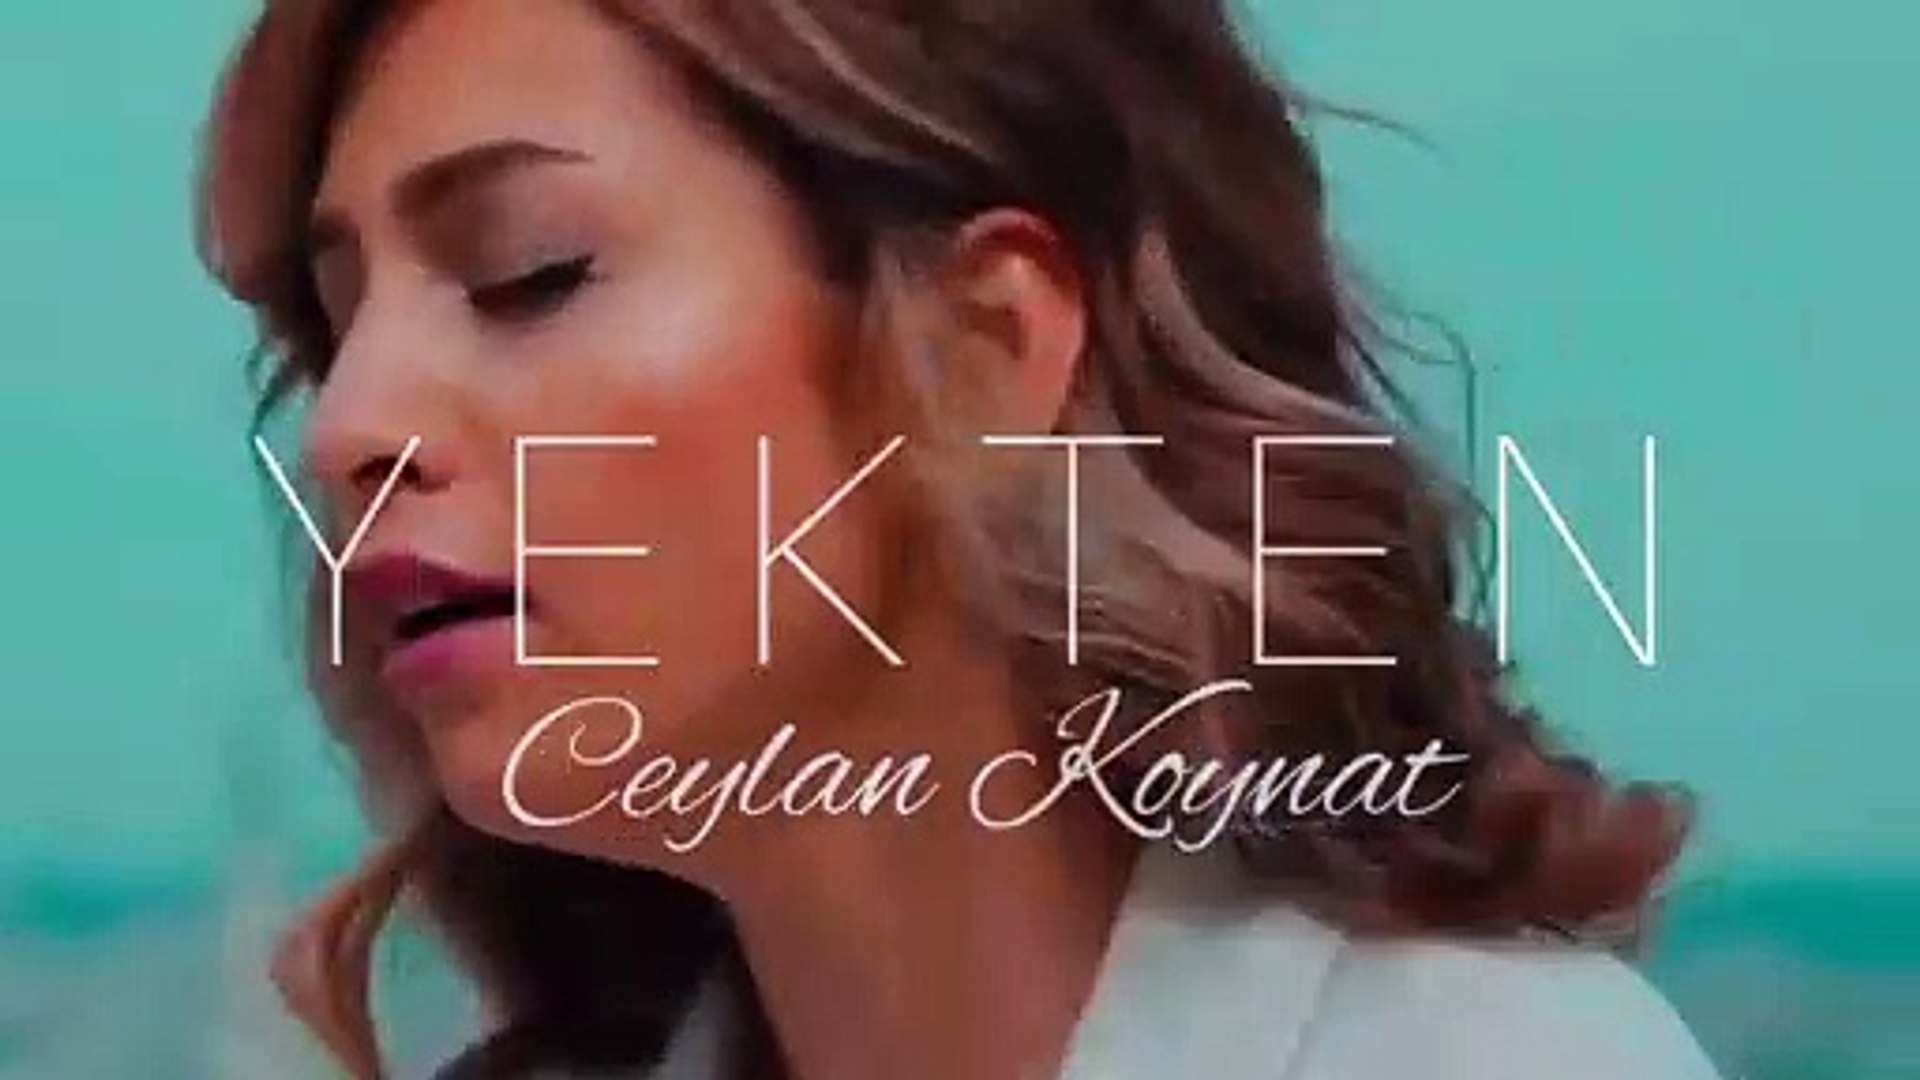 Ceylan Koynat - Yekten (KLİP) 2019 - Dailymotion Video